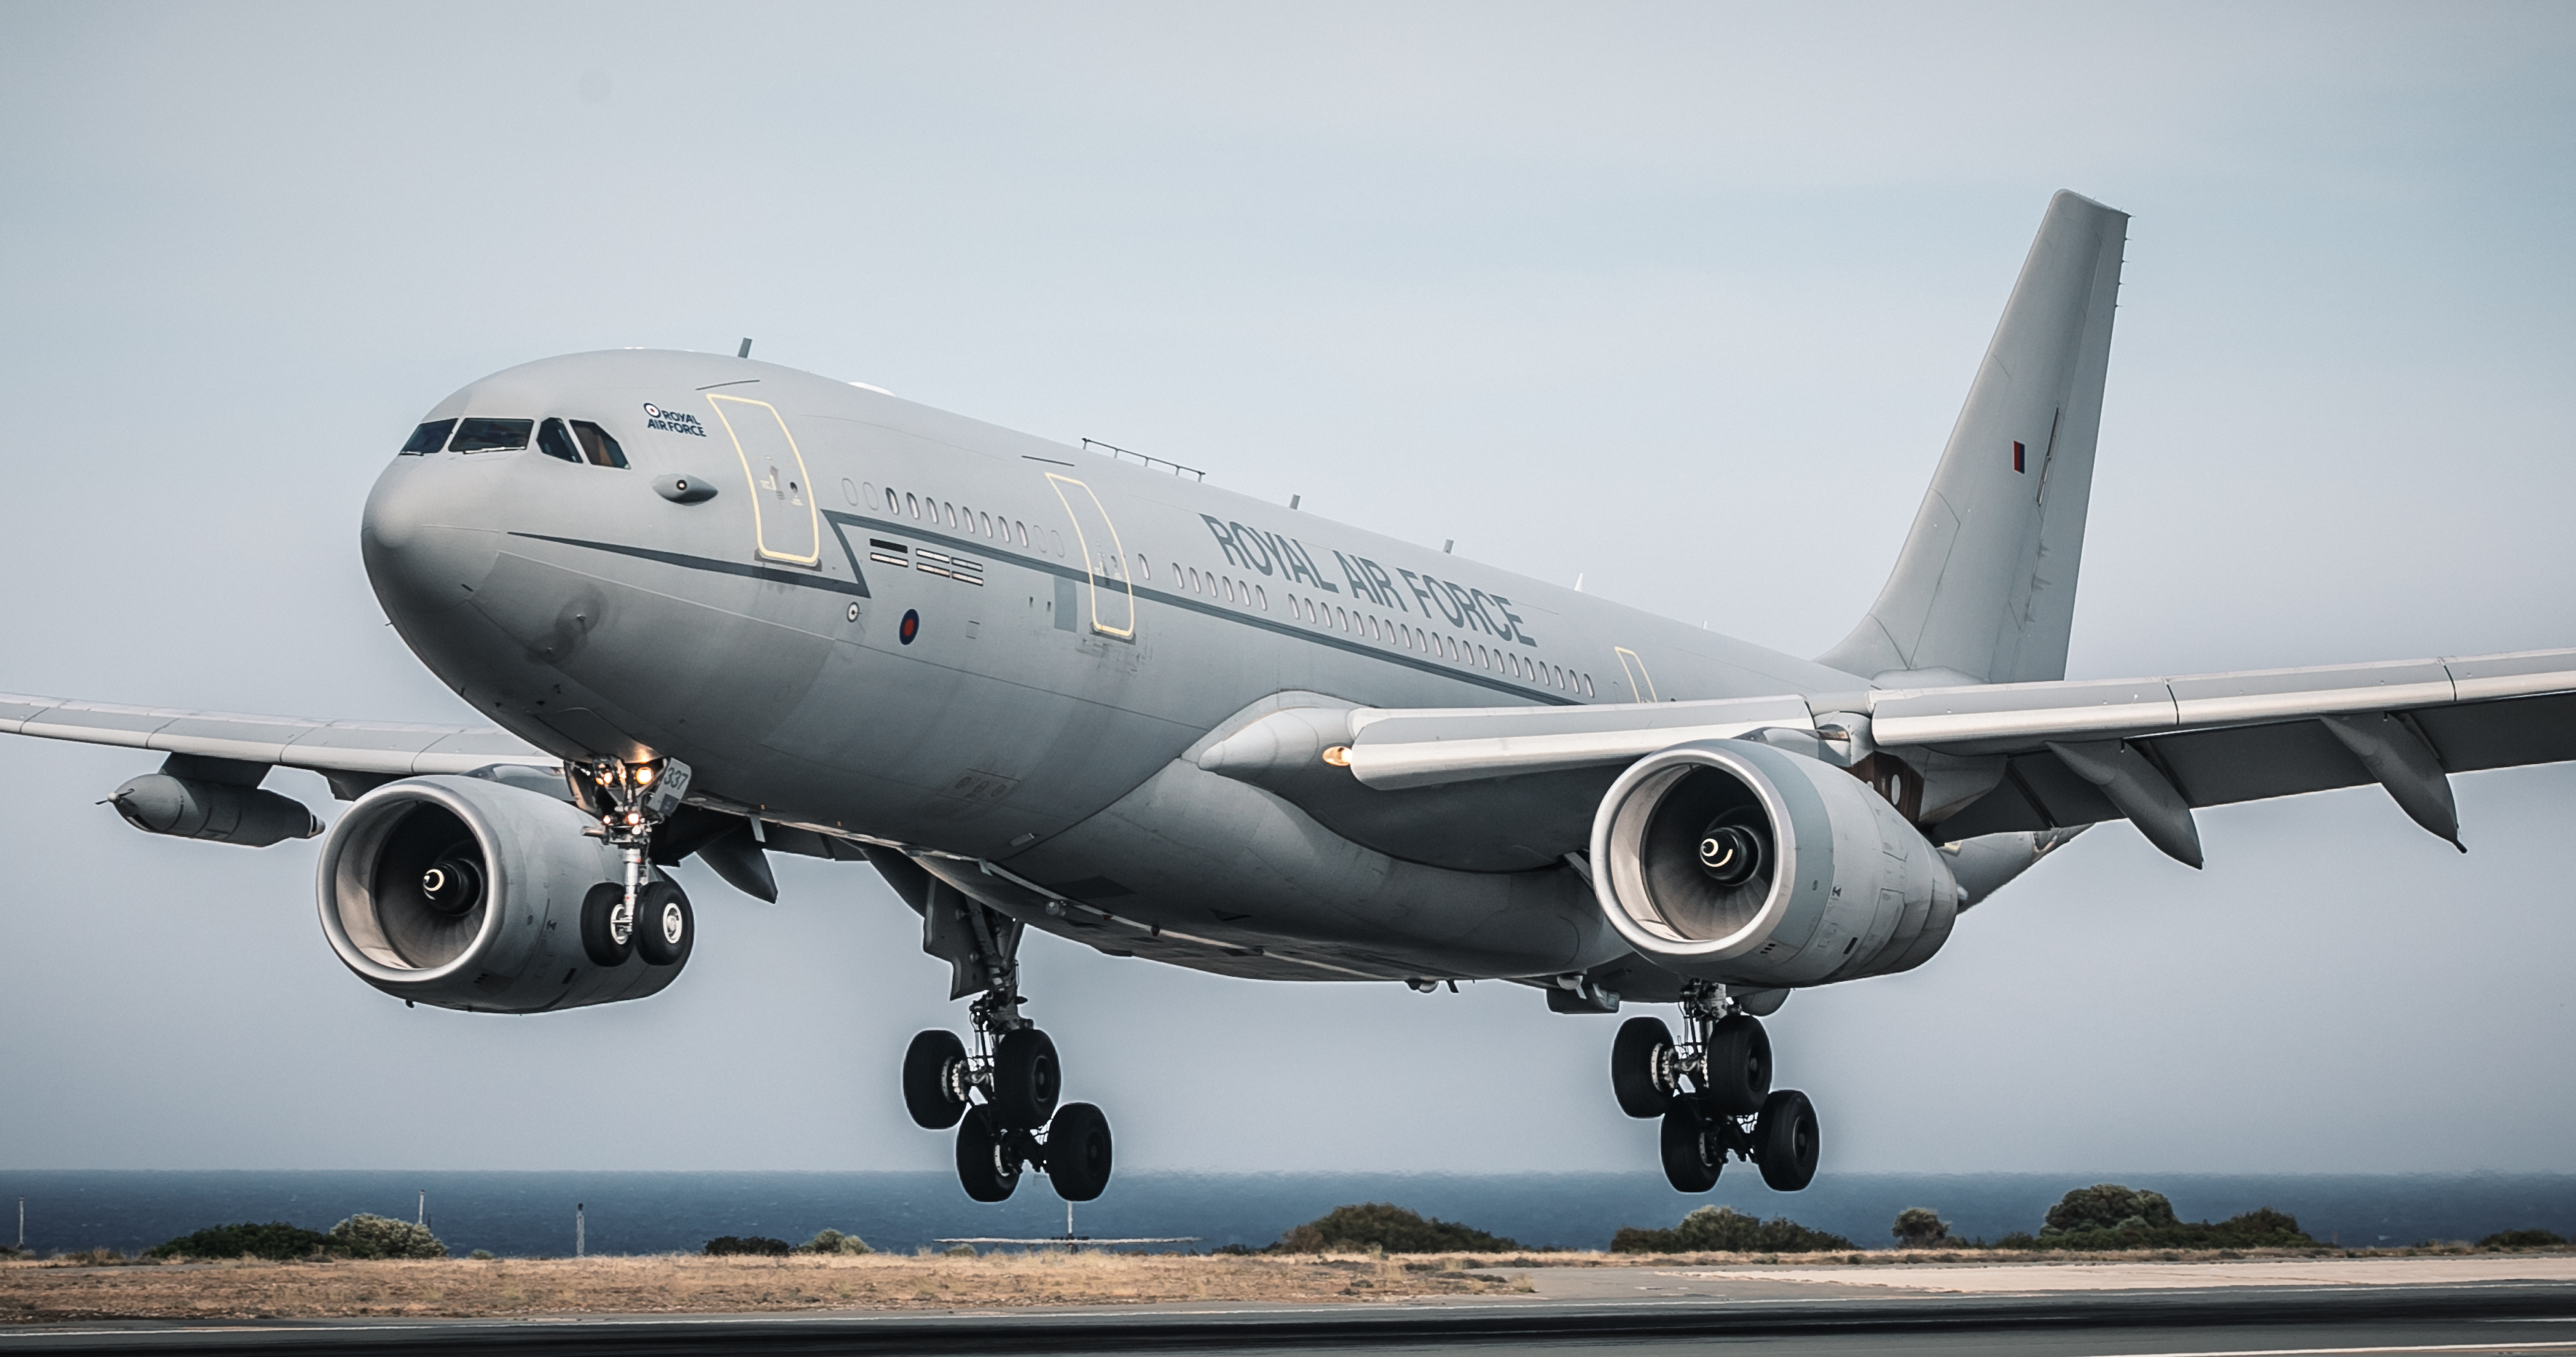 The Royal Air Force Refuels Qatar Emiri Air Force for the First Time